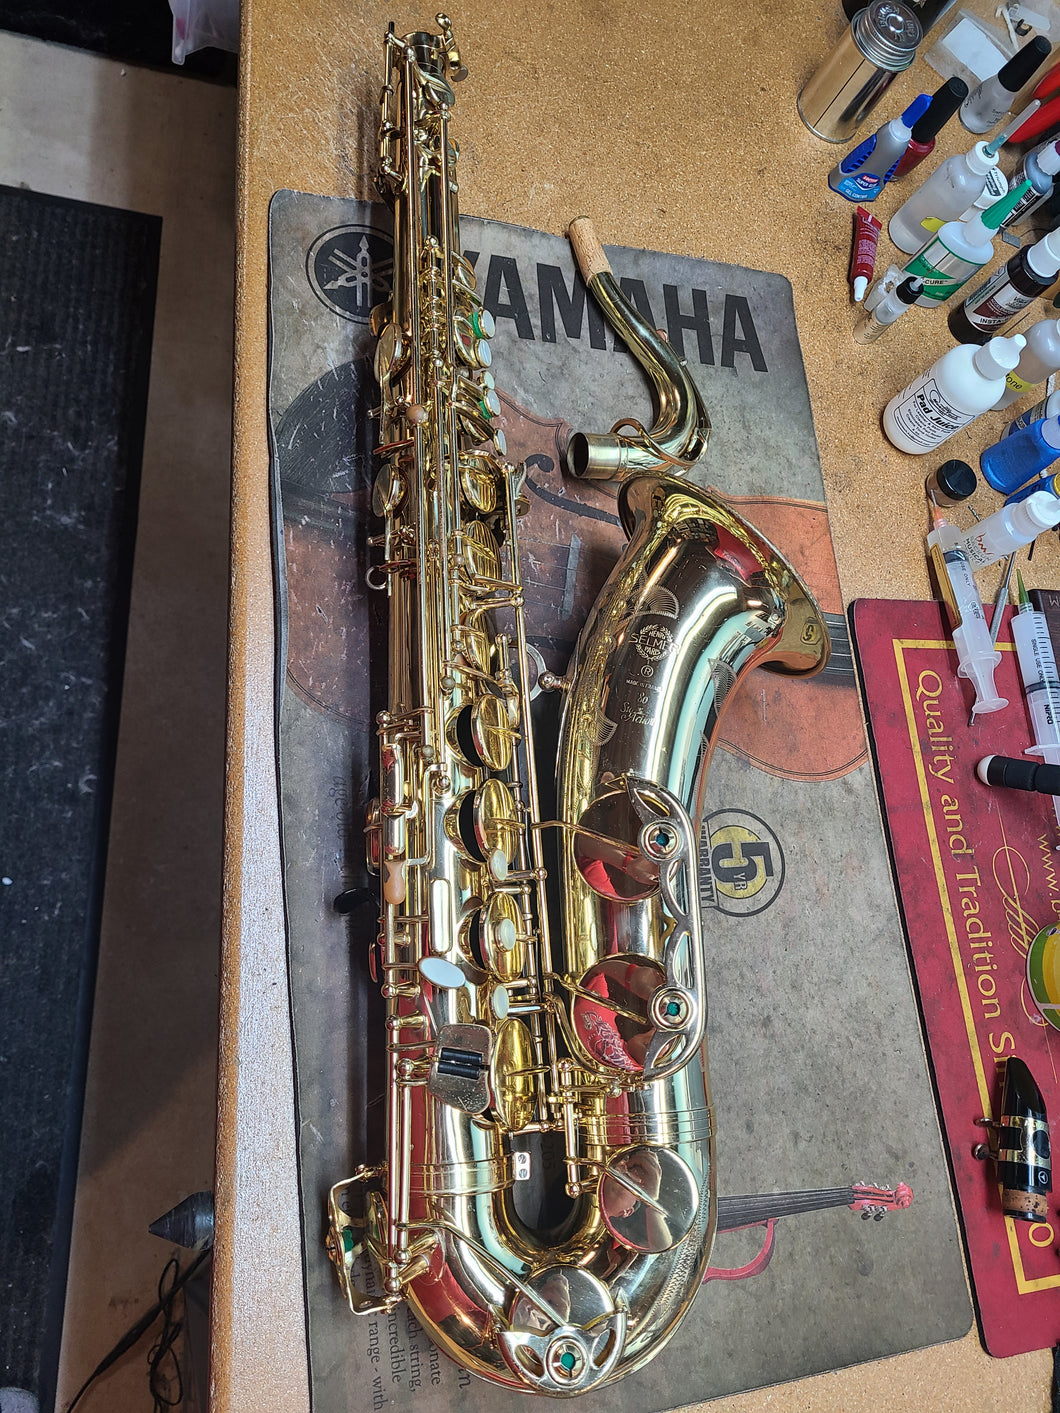 USED Selmer Super Action 80 (Series 1) Tenor Saxophone